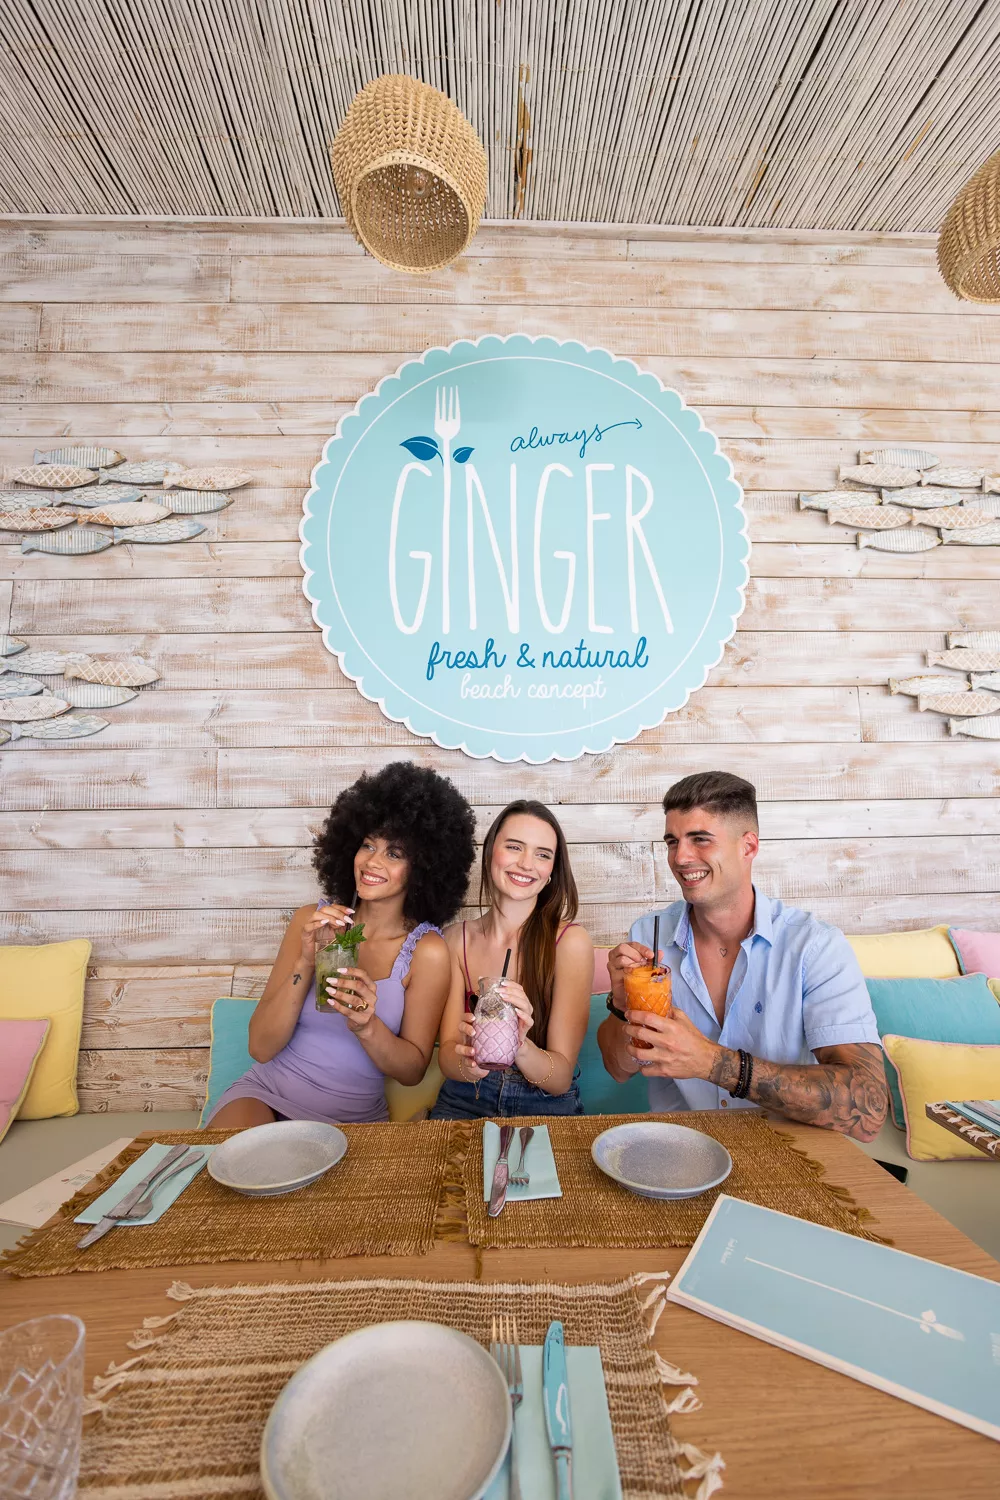 Ginger fresh & natural - Do Experts